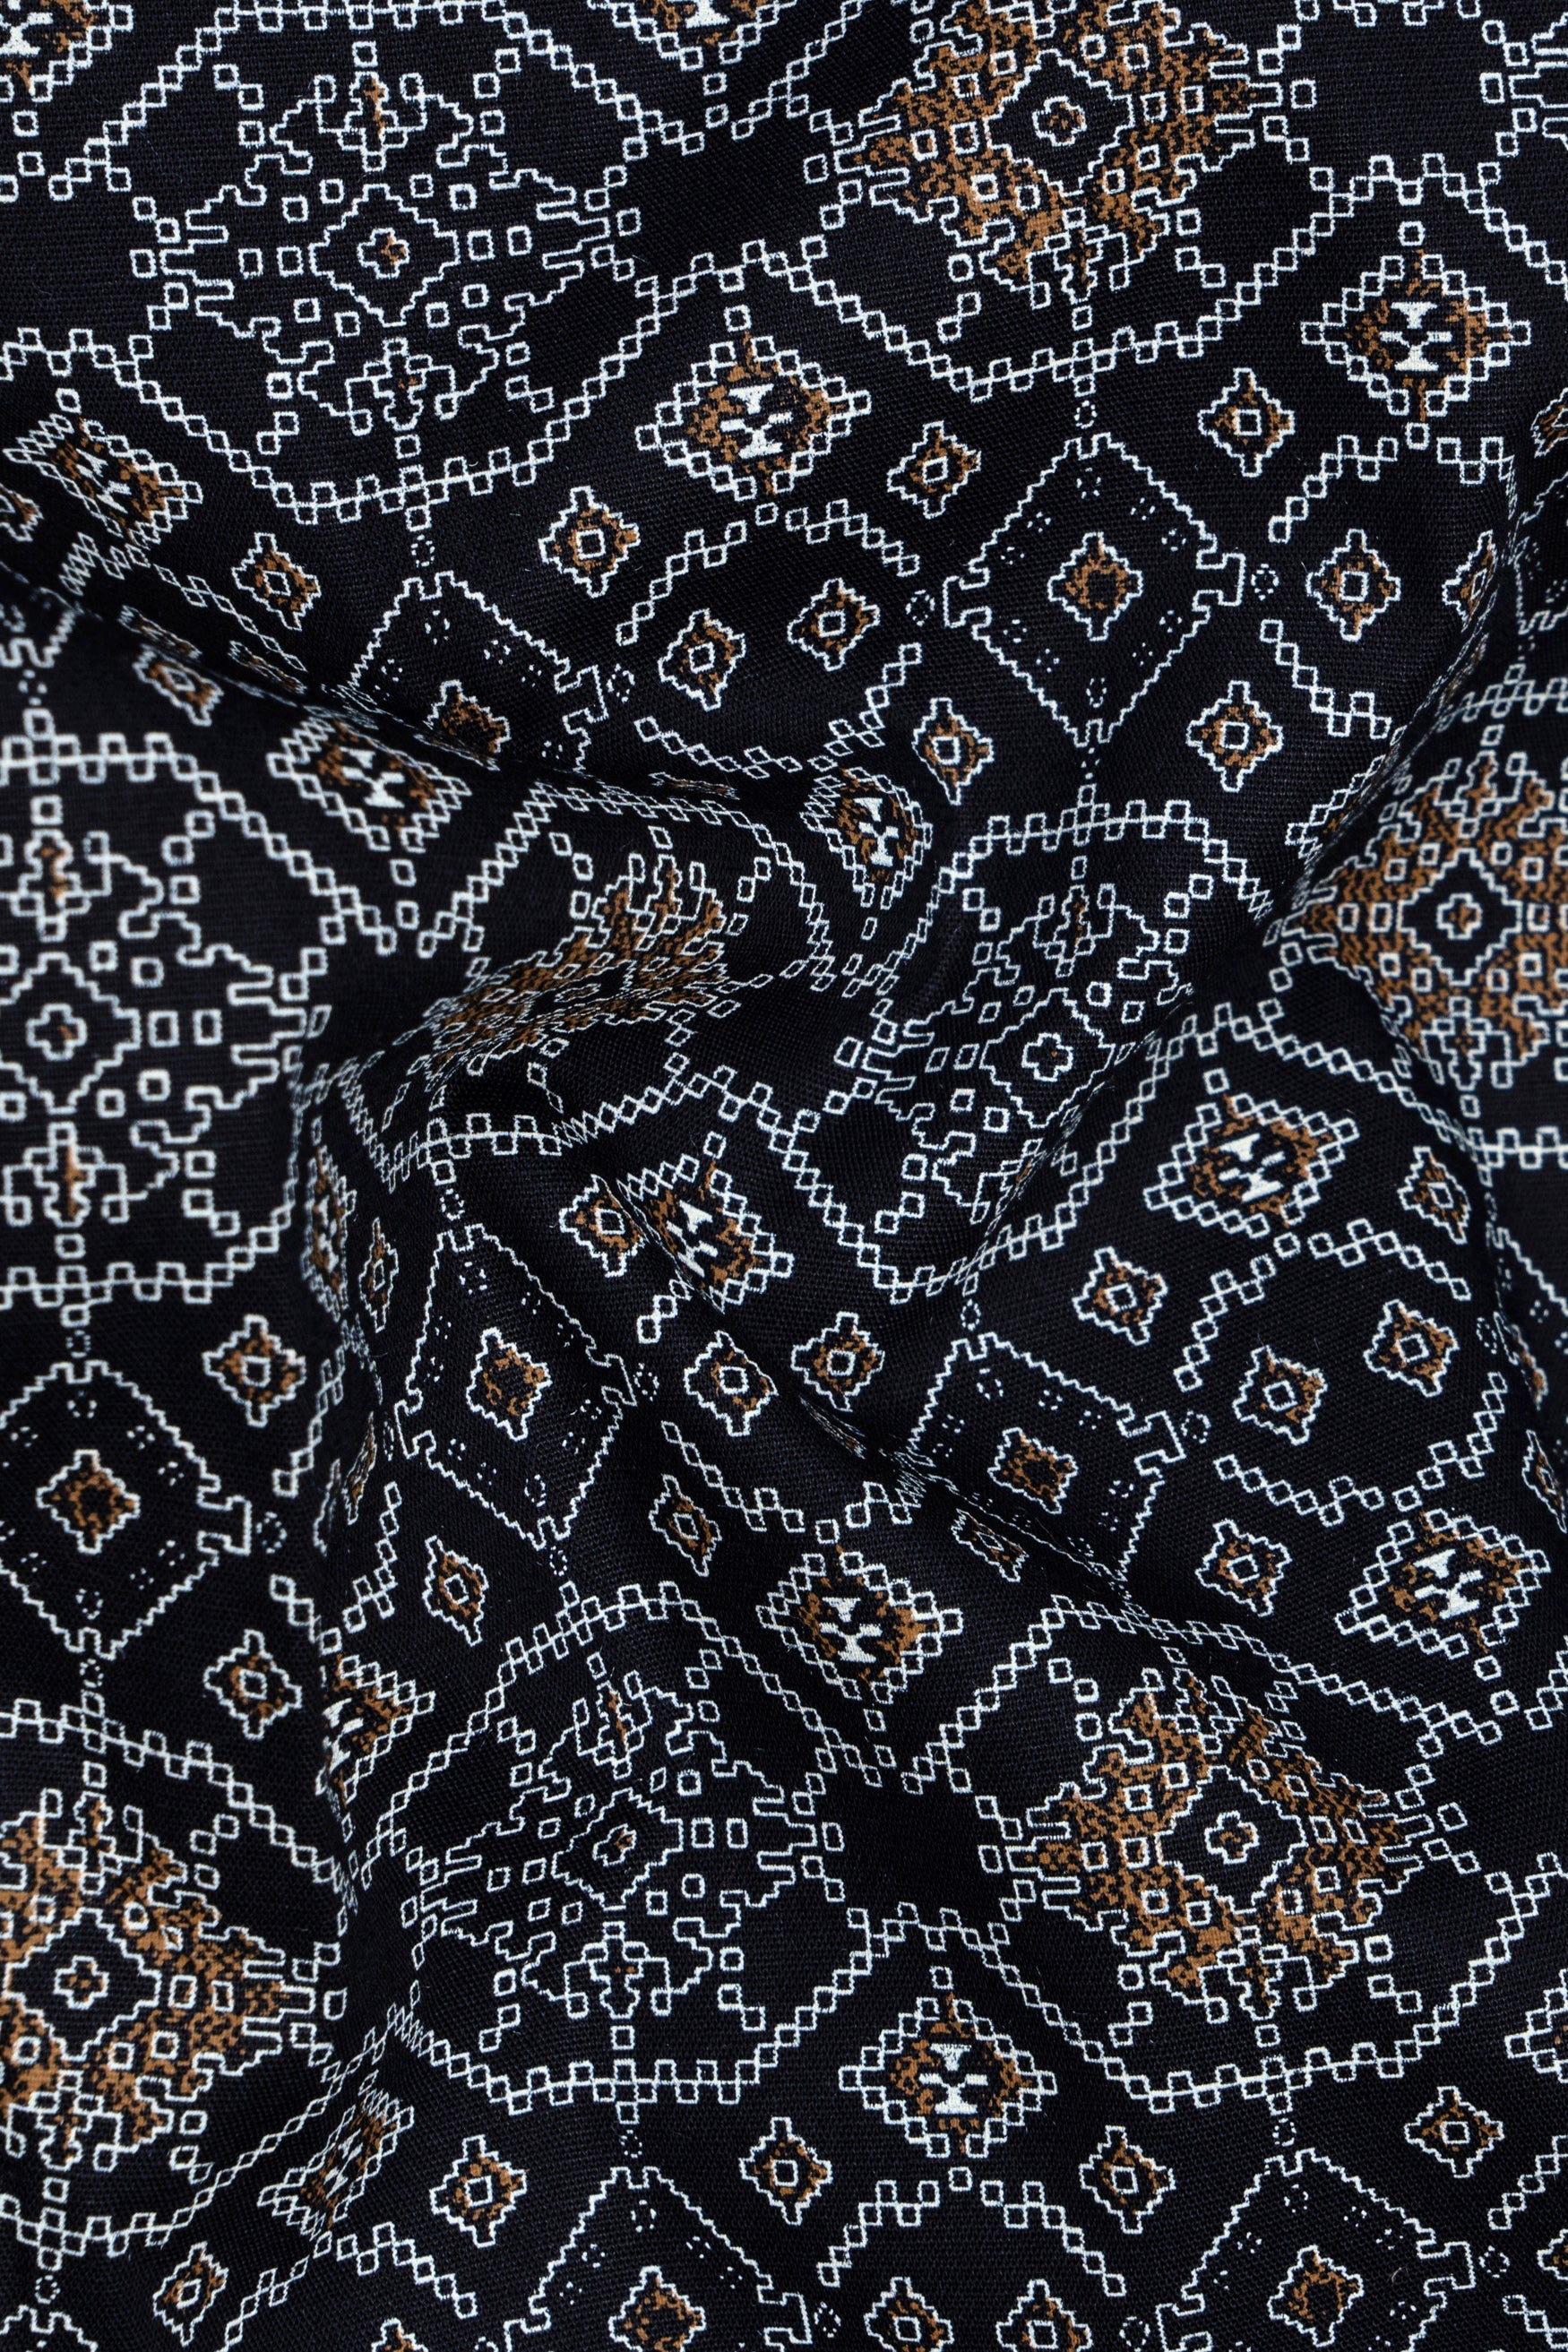 Woodsmoke Black Aztec Art Patterned Super Soft Premium Cotton Shirt